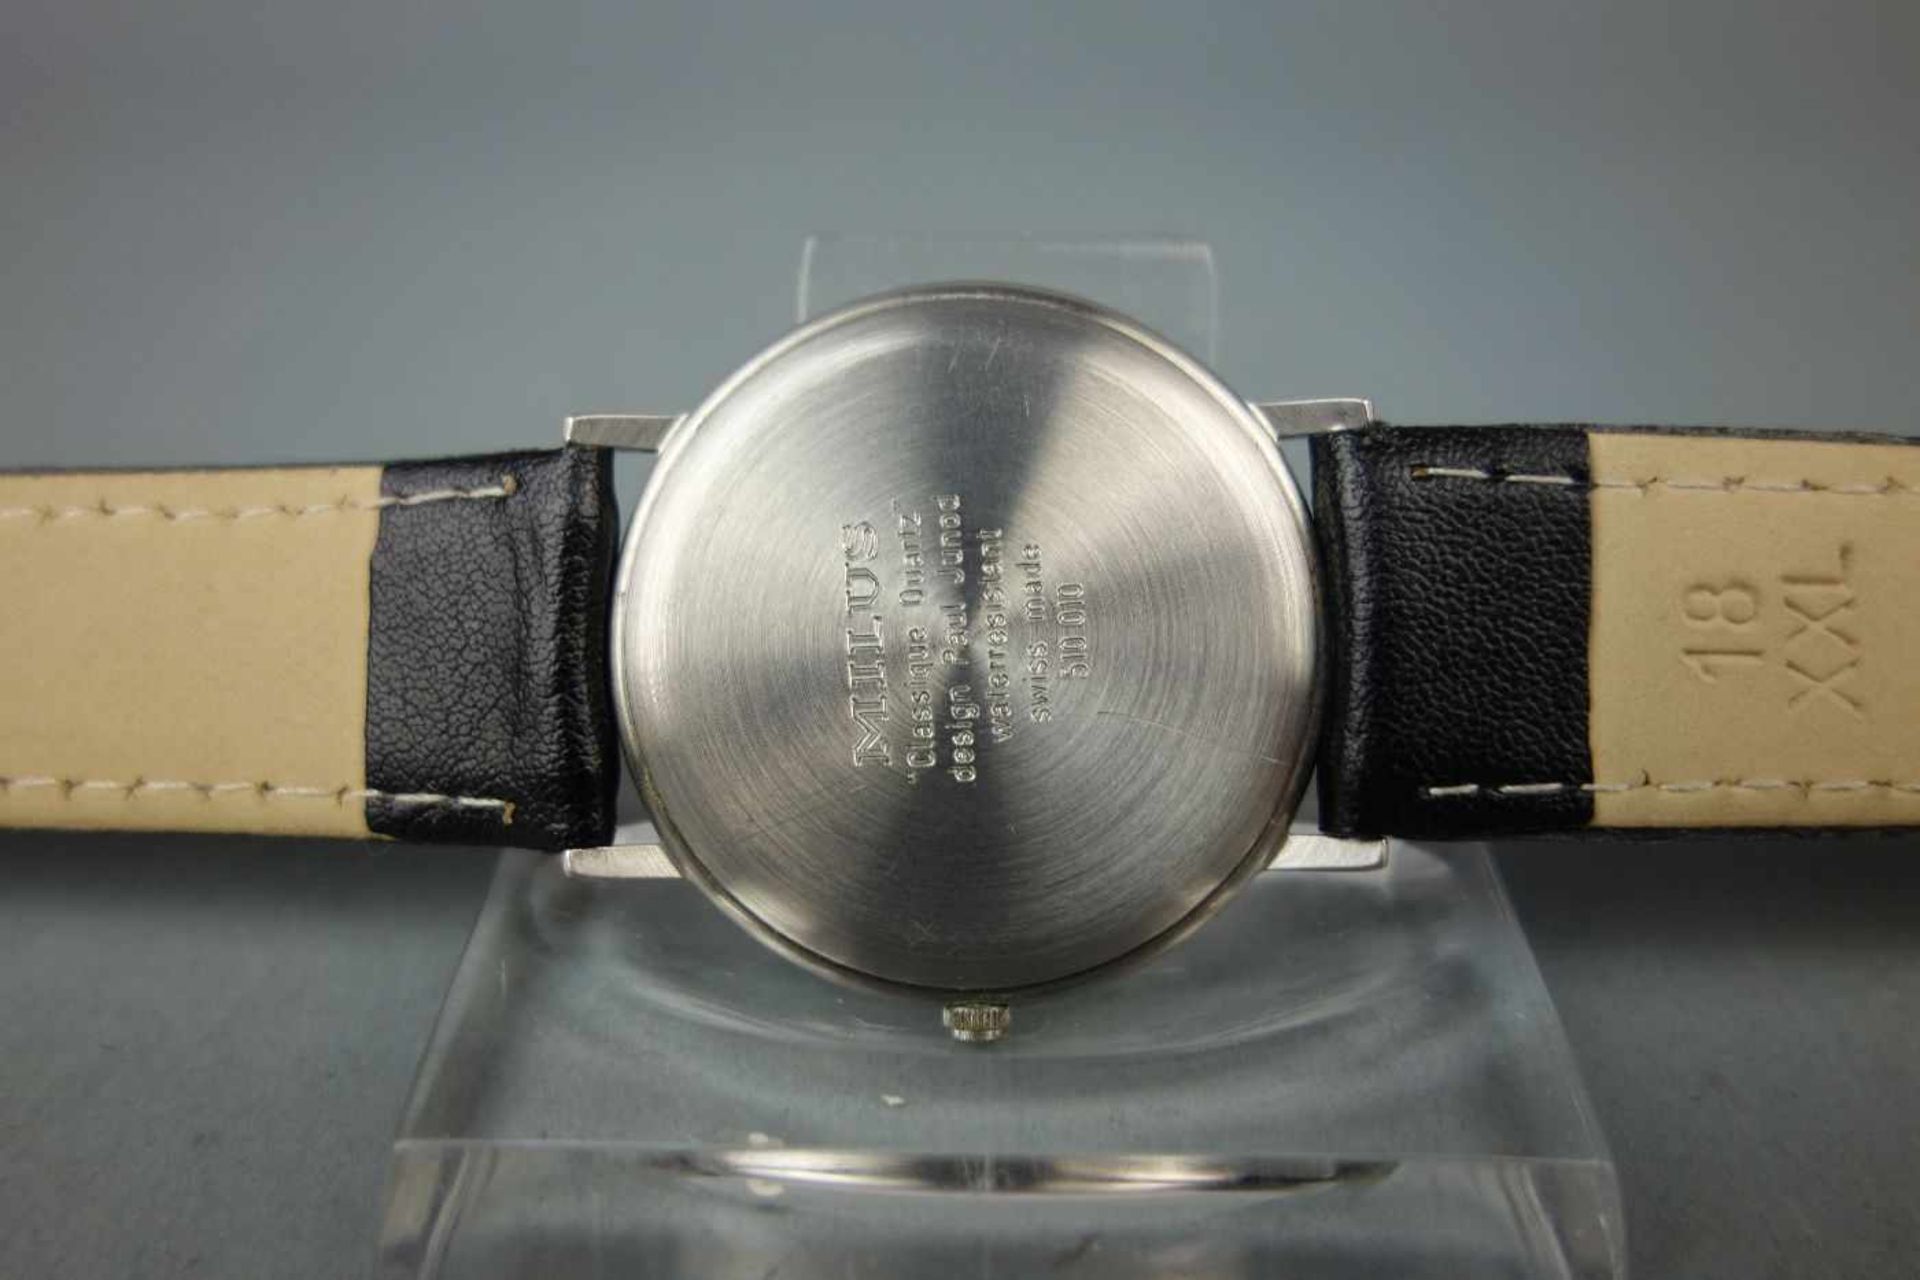 ARMBANDUHR - MILUS / wristwatch, Quartz, Schweiz. Rundes Edelstahlgehäuse an Lederarmband. - Bild 5 aus 5